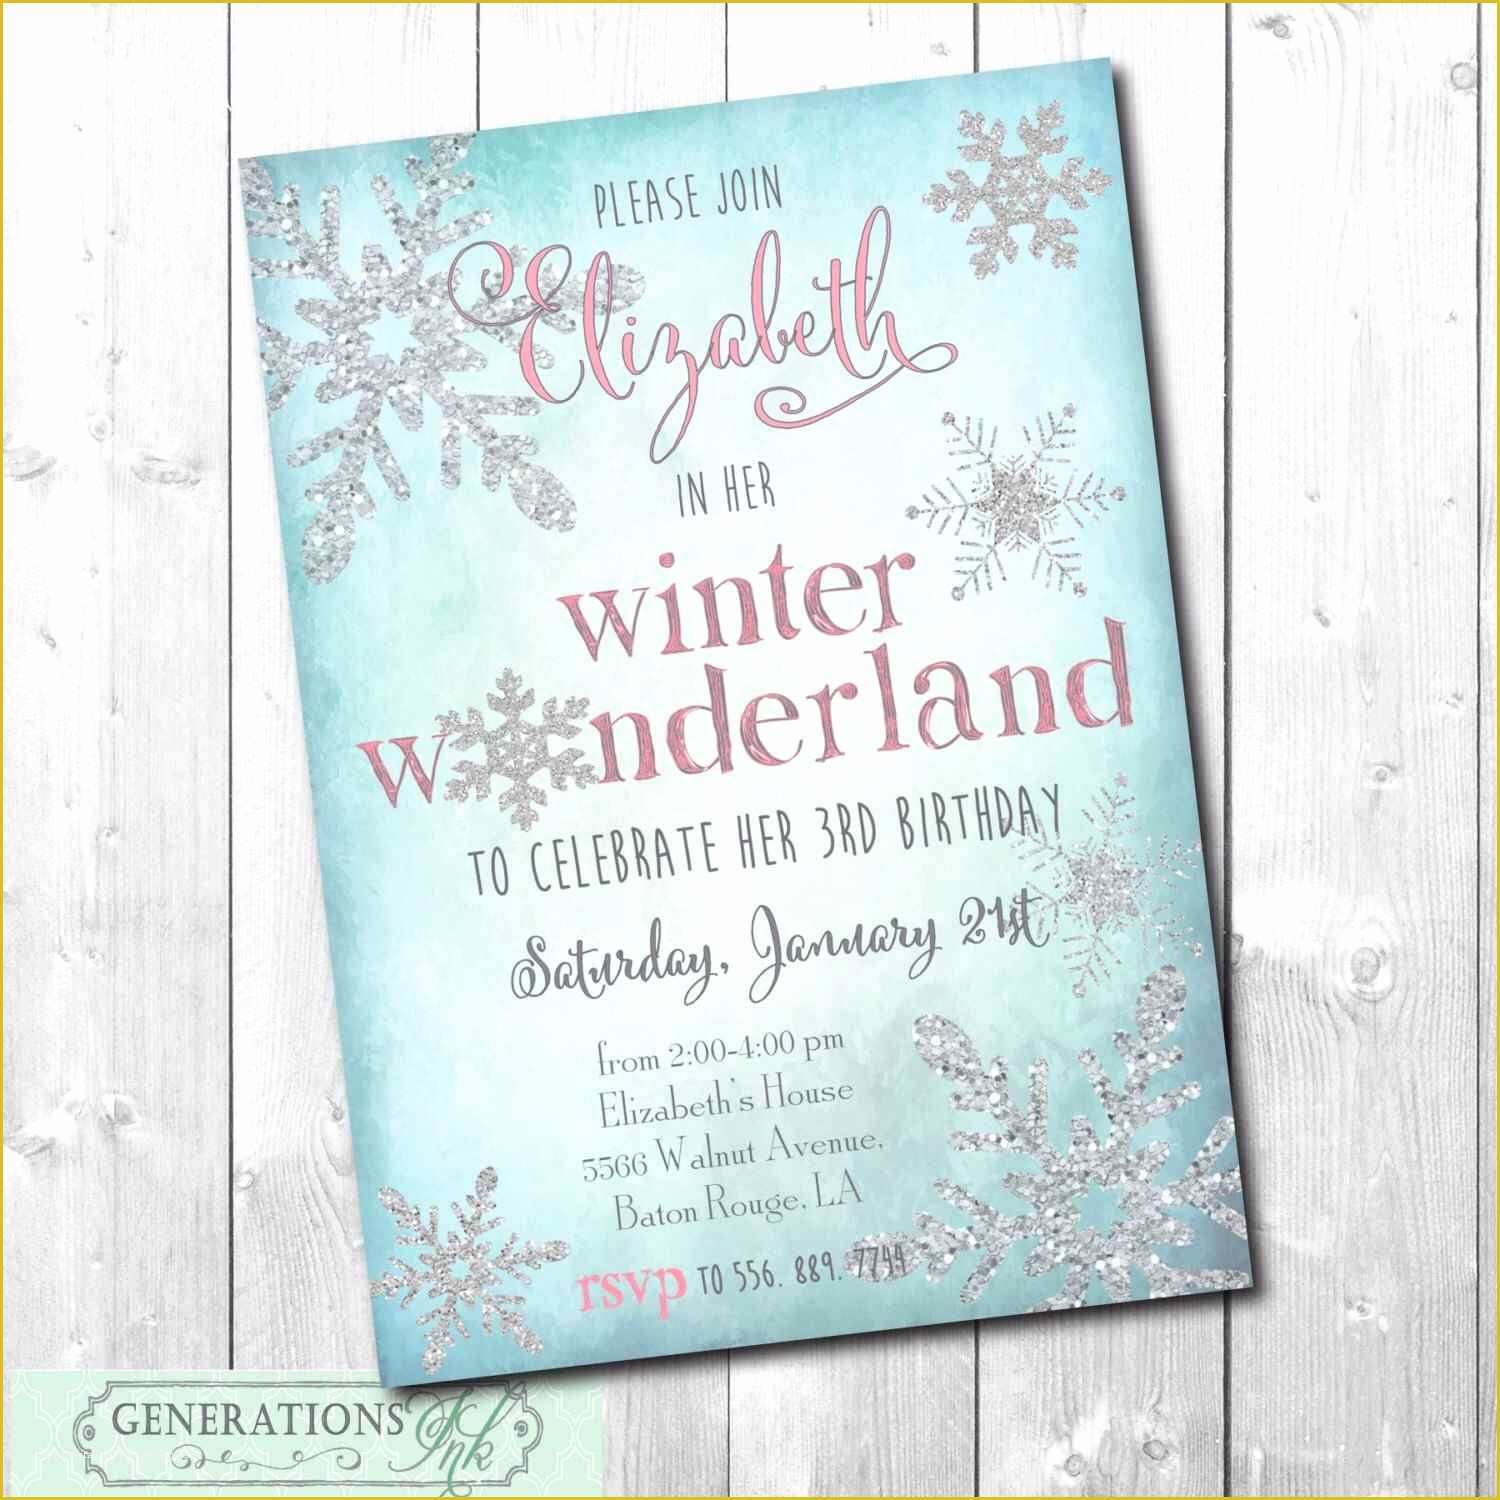 Free Winter Wonderland Invitations Templates Of Winter Wonderland Invitations Templates Lovely Birthday